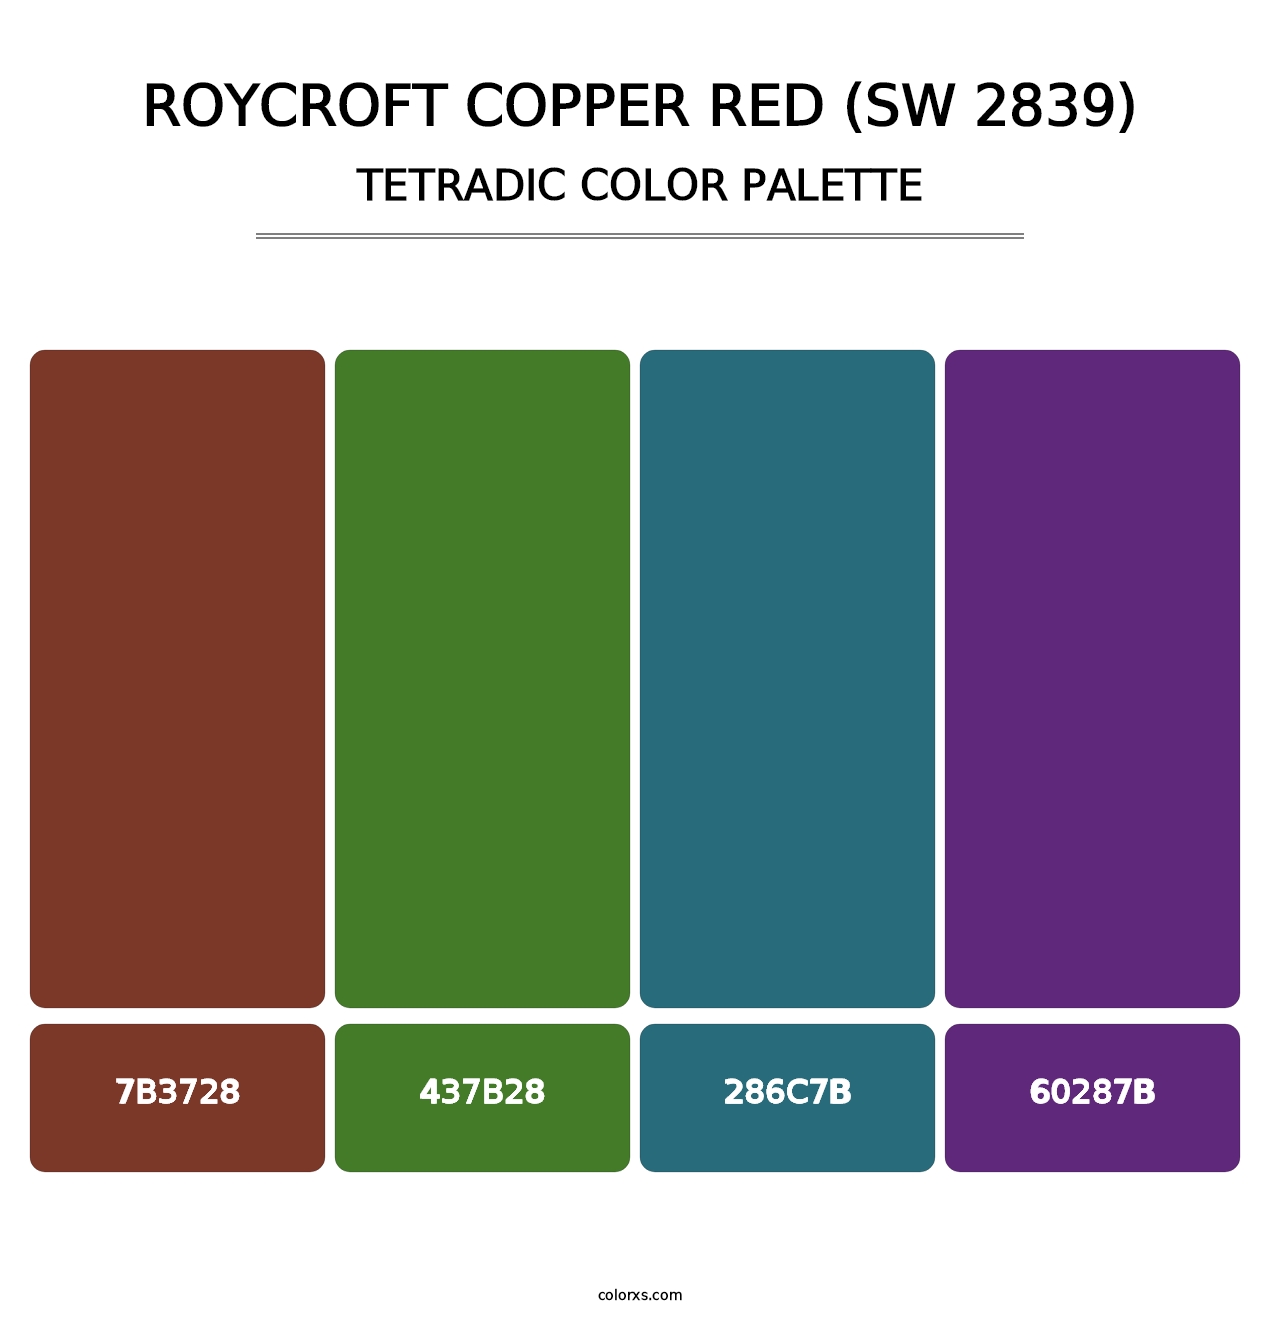 Roycroft Copper Red (SW 2839) - Tetradic Color Palette